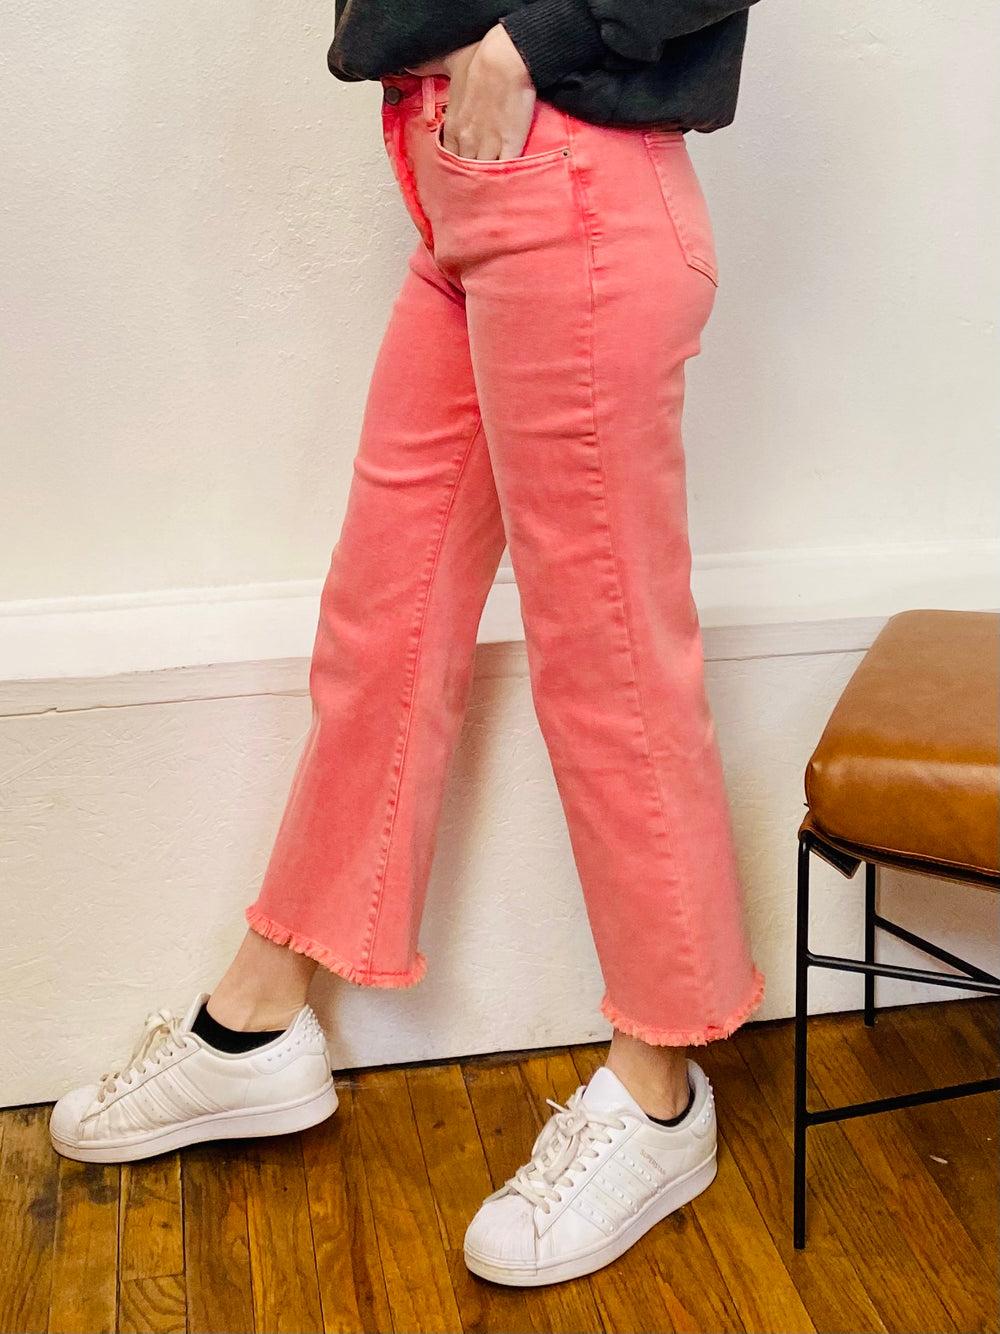 Elle Strapless Pink Dress ELAN  Anatomy Clothing Co. – Anatomy Clothing  Boutique